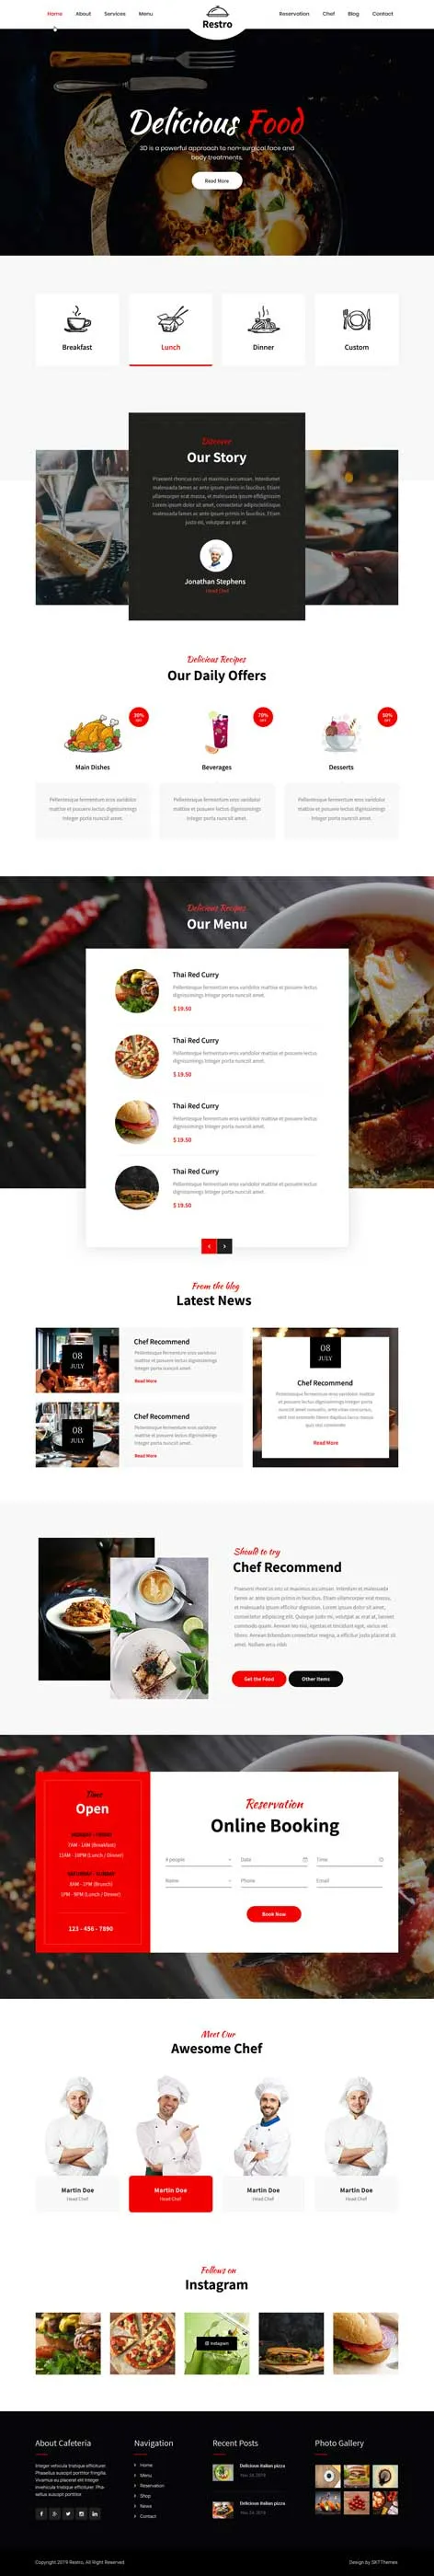 Restro - cafe and restaurant WordPress theme